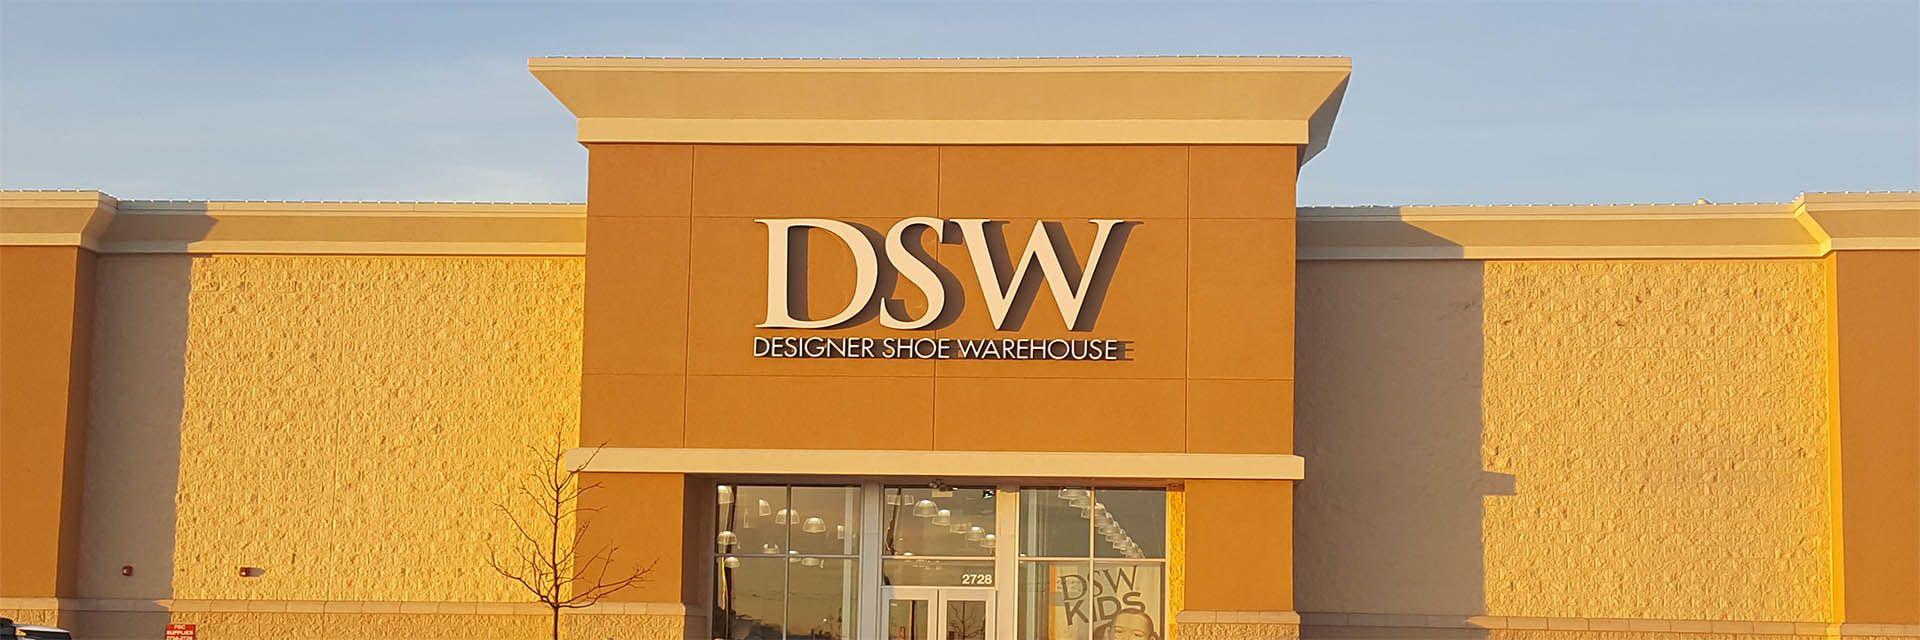 DSW Logo - DSW Designer Shoe Warehouse - Wichita.com